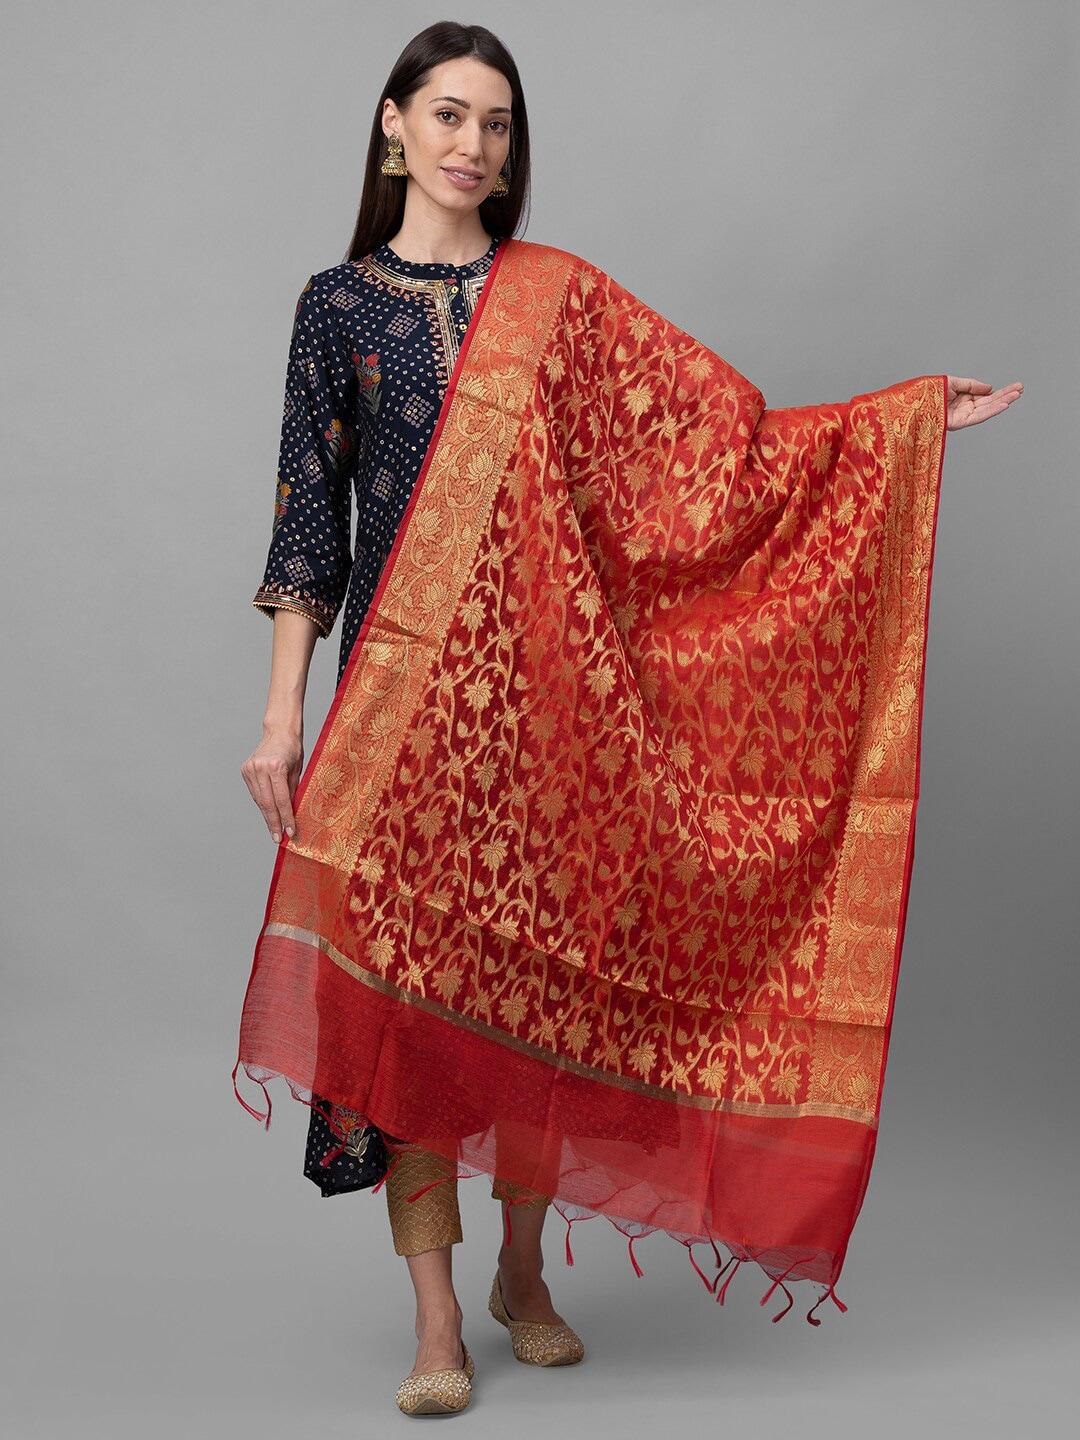 globus-red-&-gold-toned-ethnic-motifs-woven-design-dupatta-with-zari